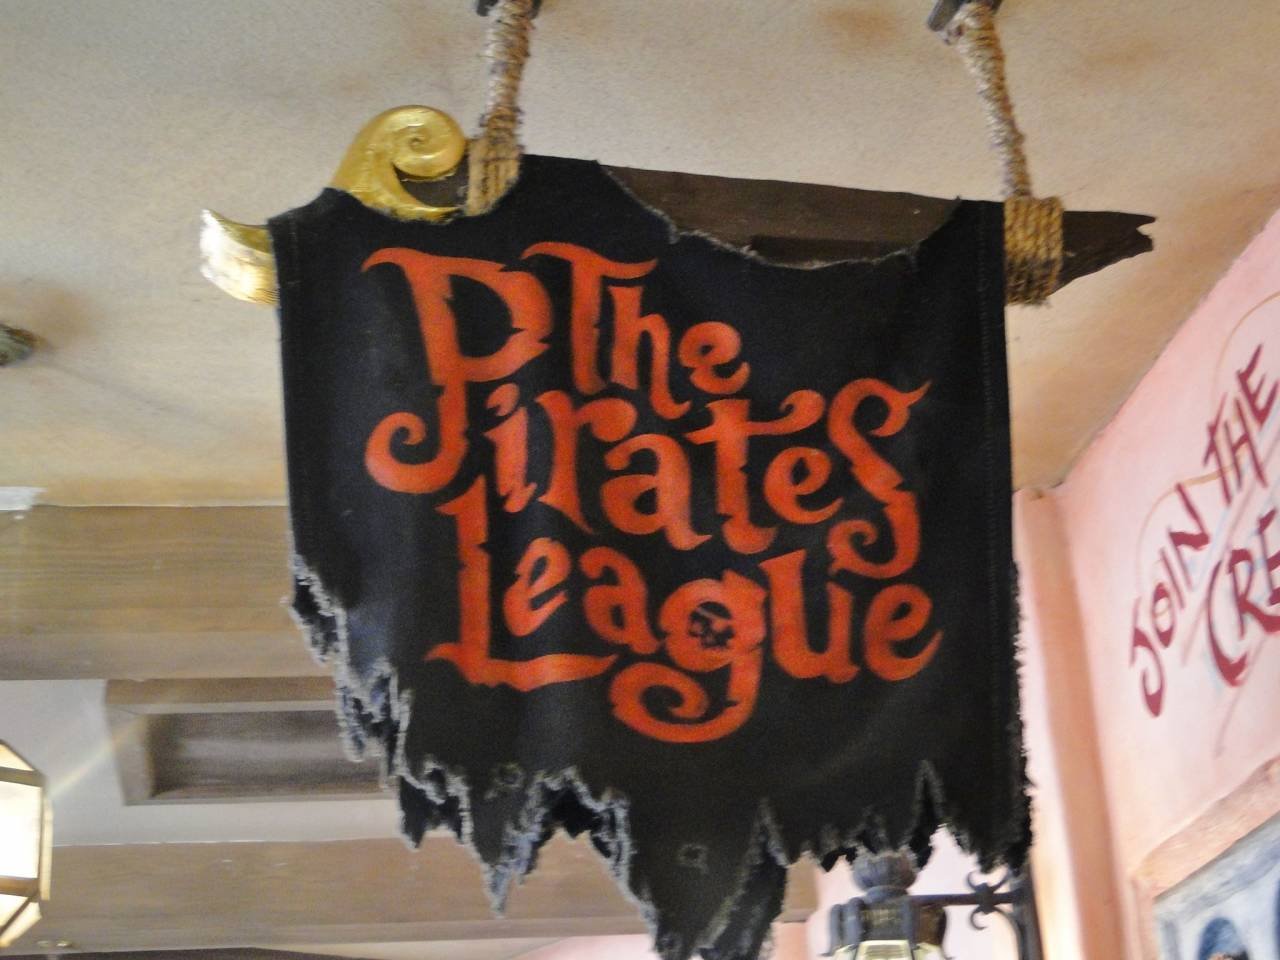 Pirates League